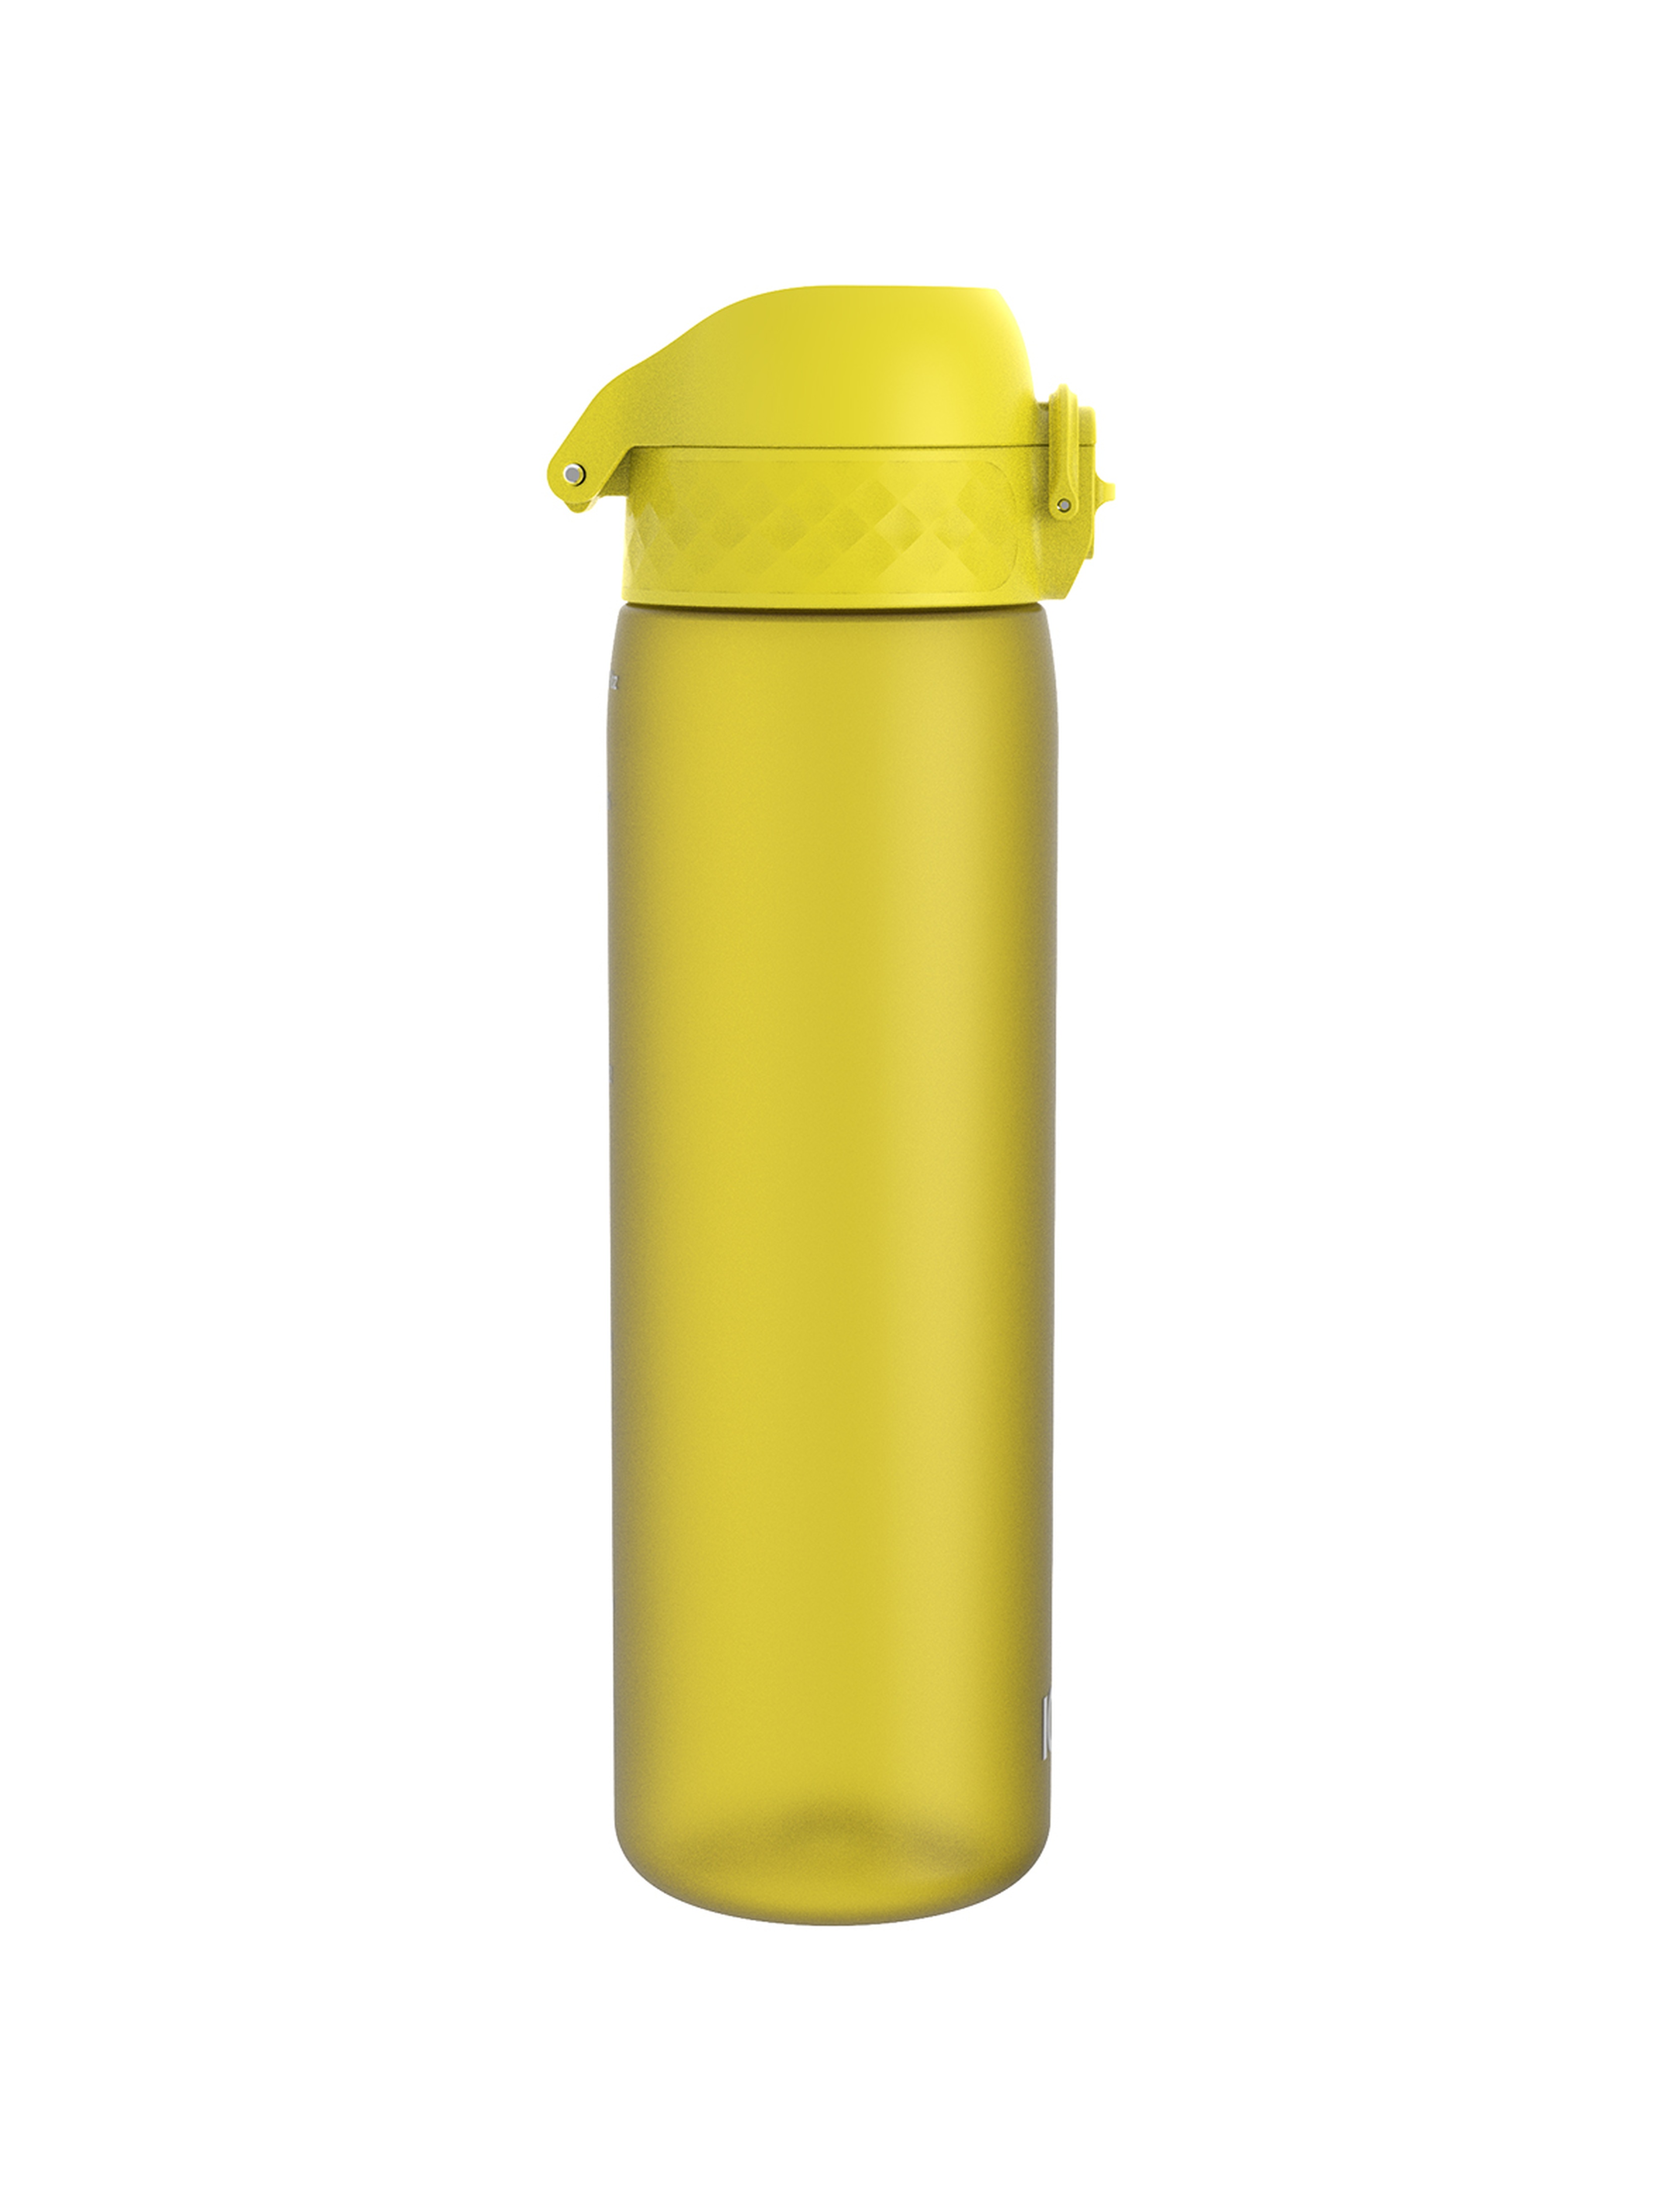 Butelka na wodę ION8 BPA Free Yellow 500ml - żółta